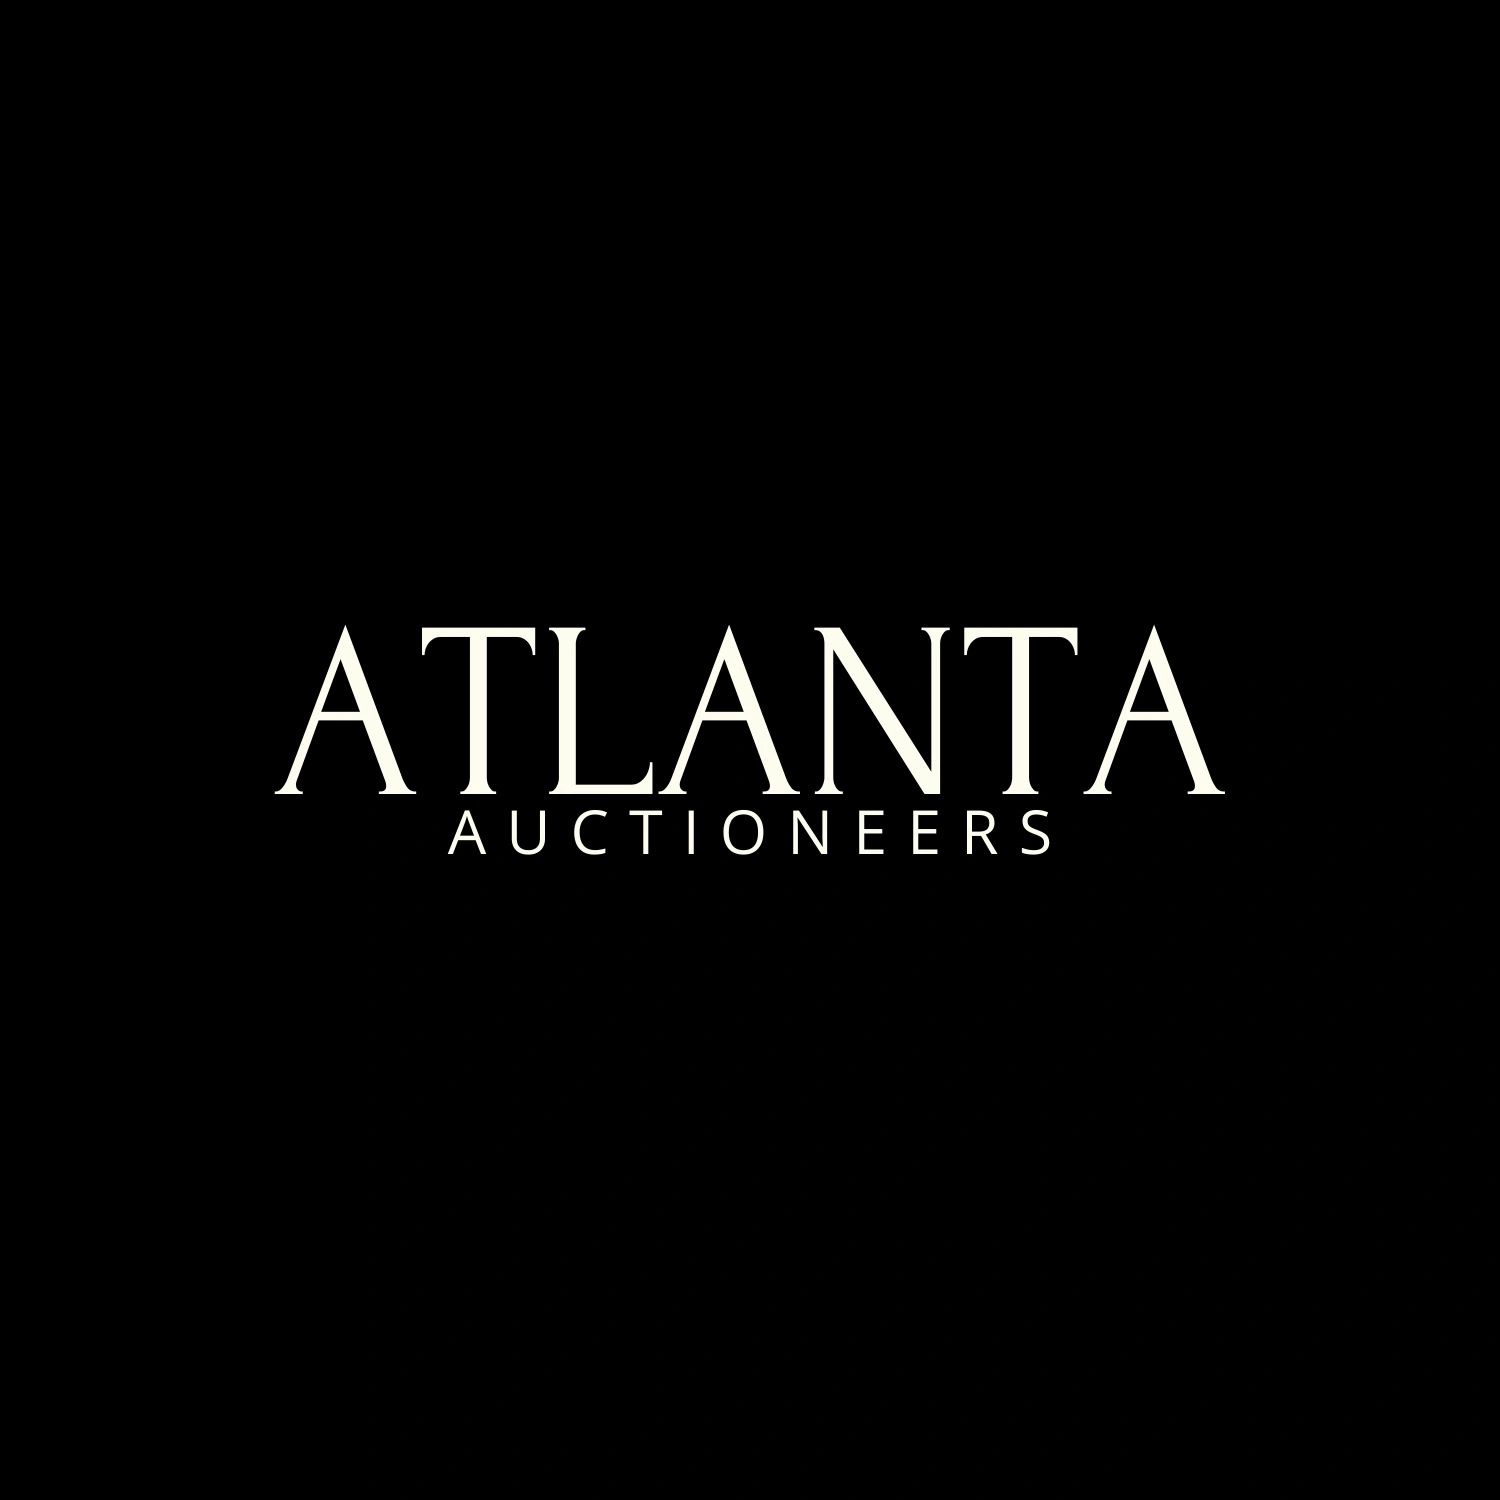 (c) Atlantaauctioneers.com